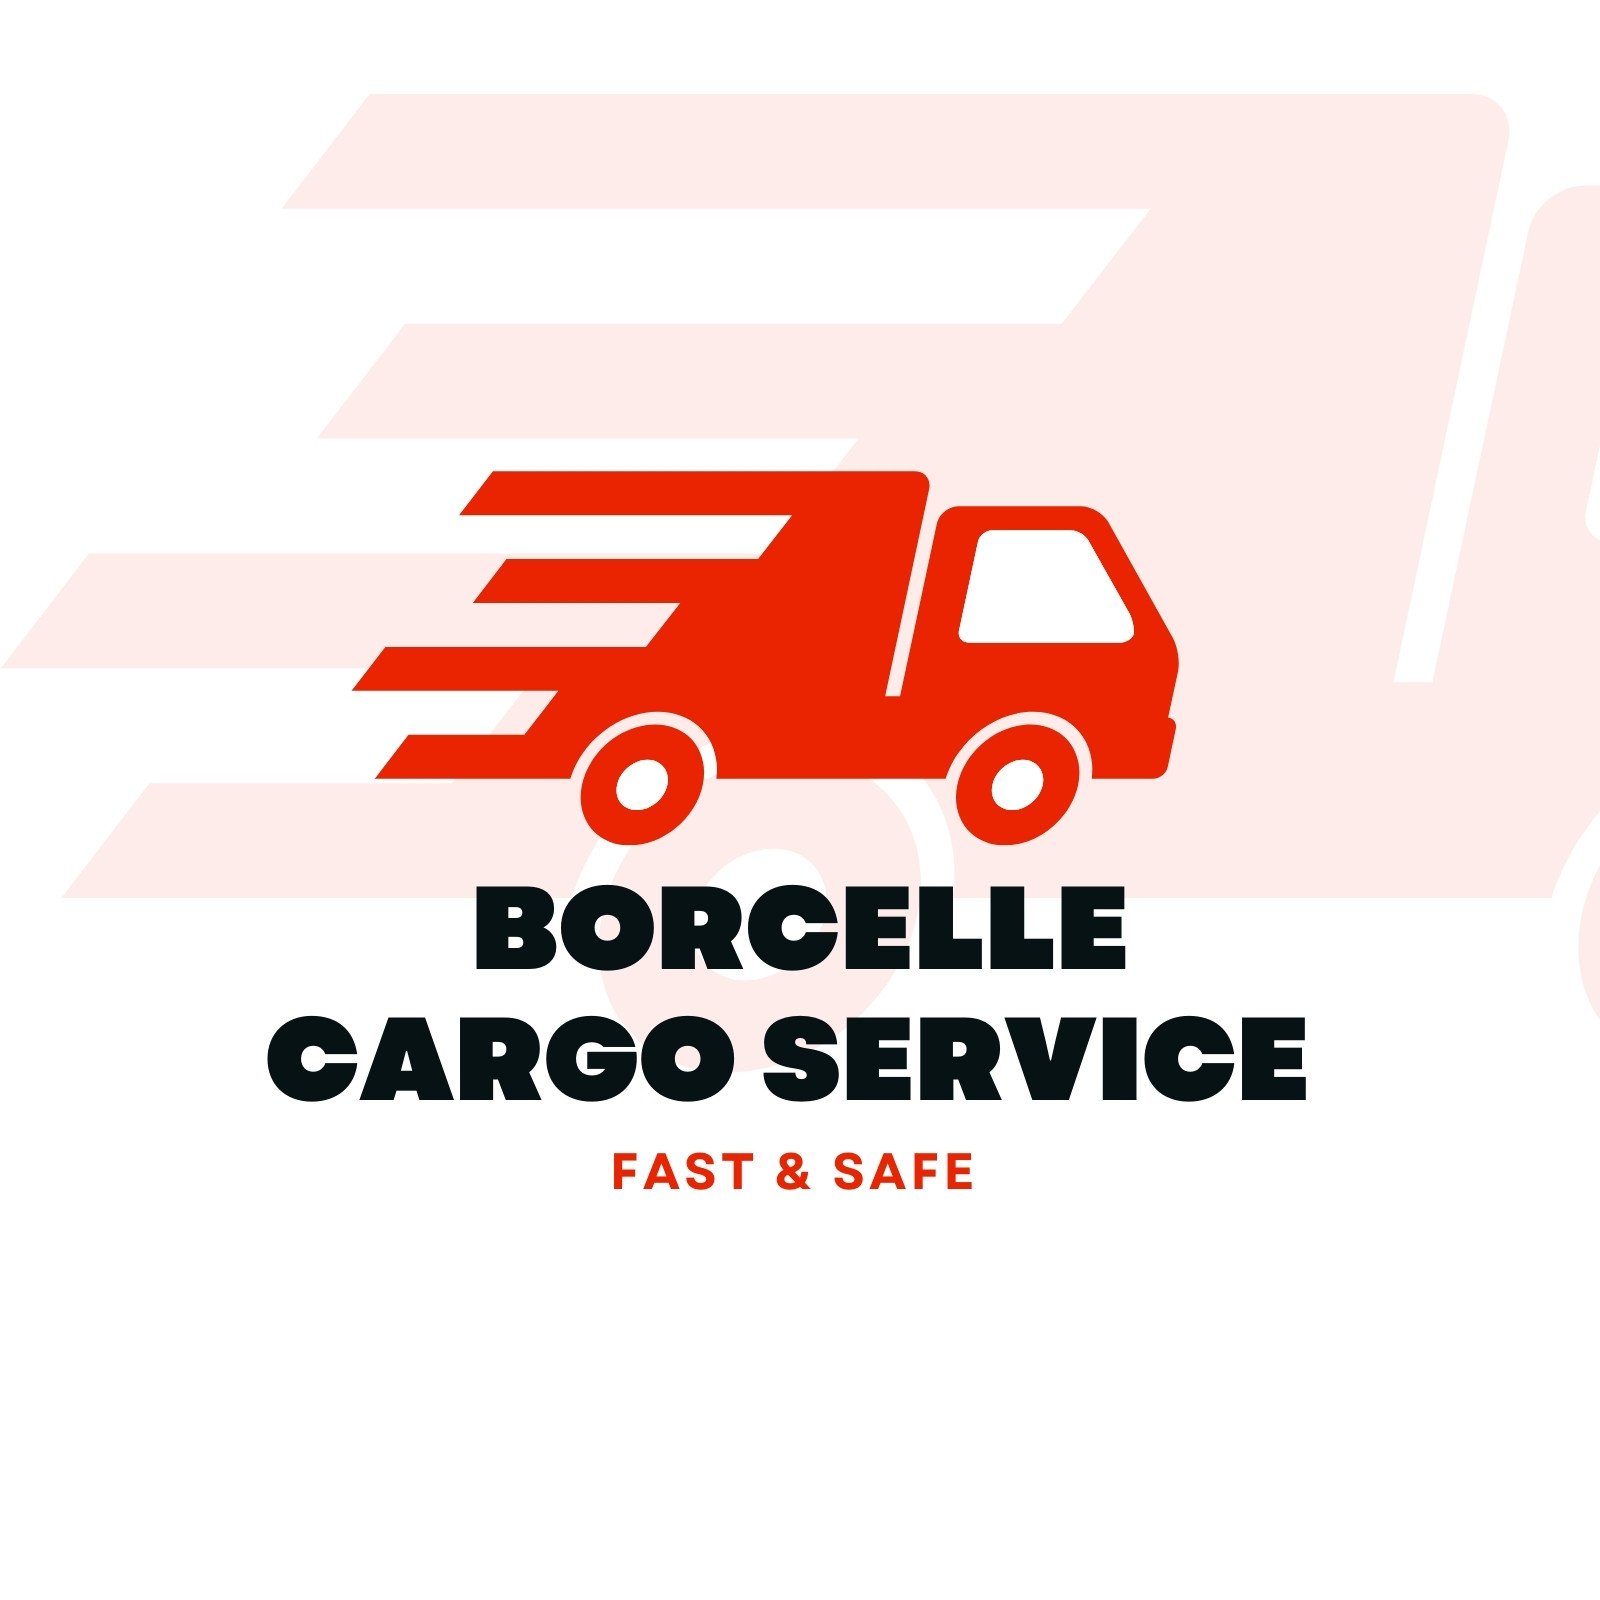 Fast Courier Logo | Courier, ? logo, Service logo